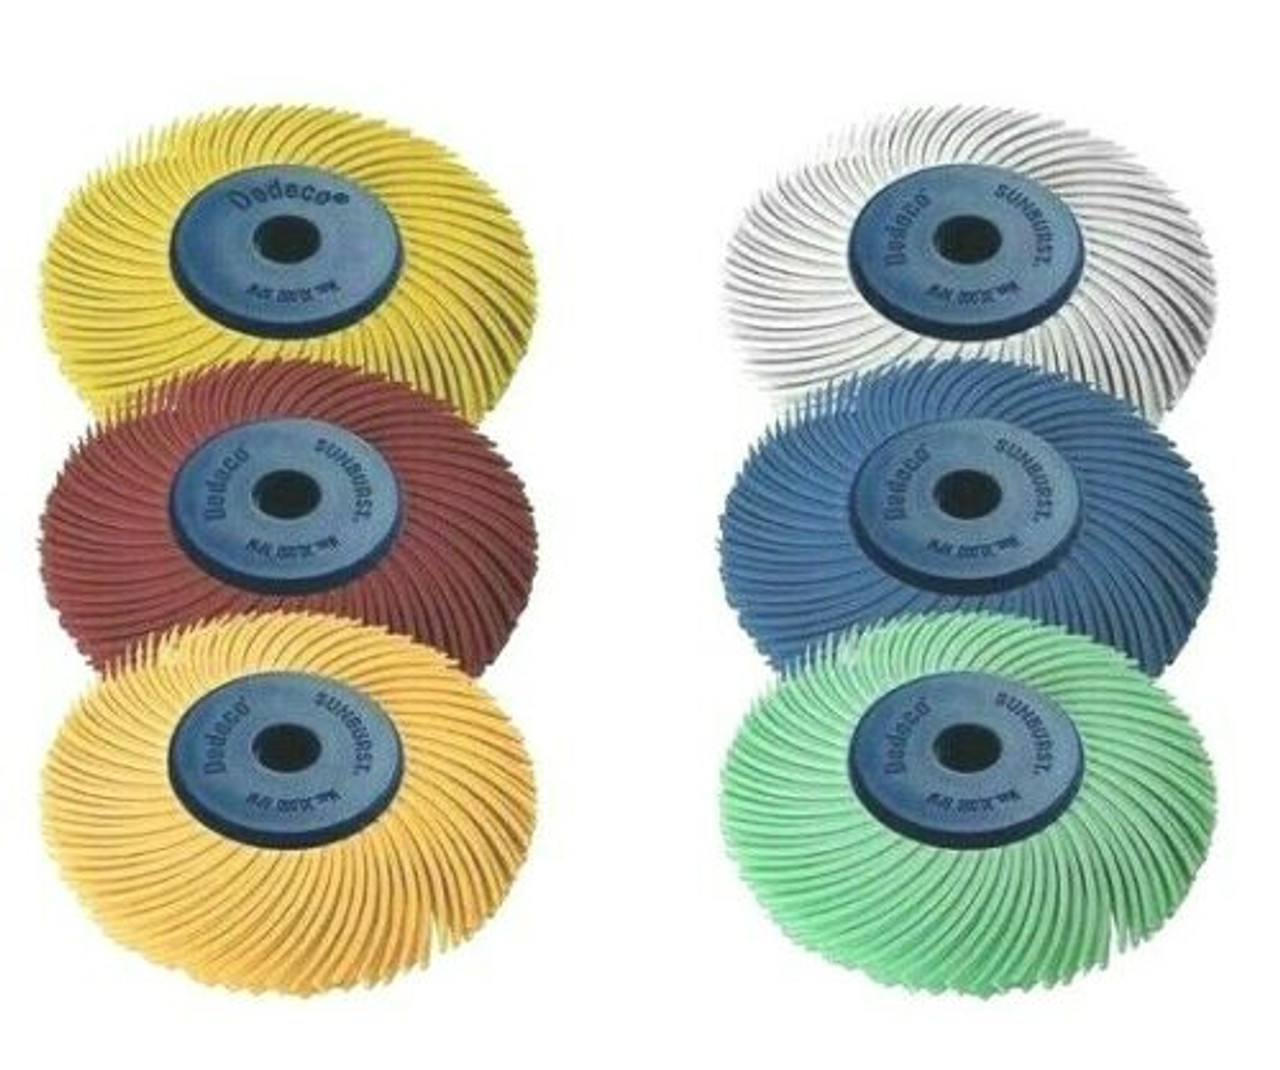 2" Dedeco Sunburst Radial Bristle Disc Assortment 1/4" Arbor 3-PLY Disc 6 Grits